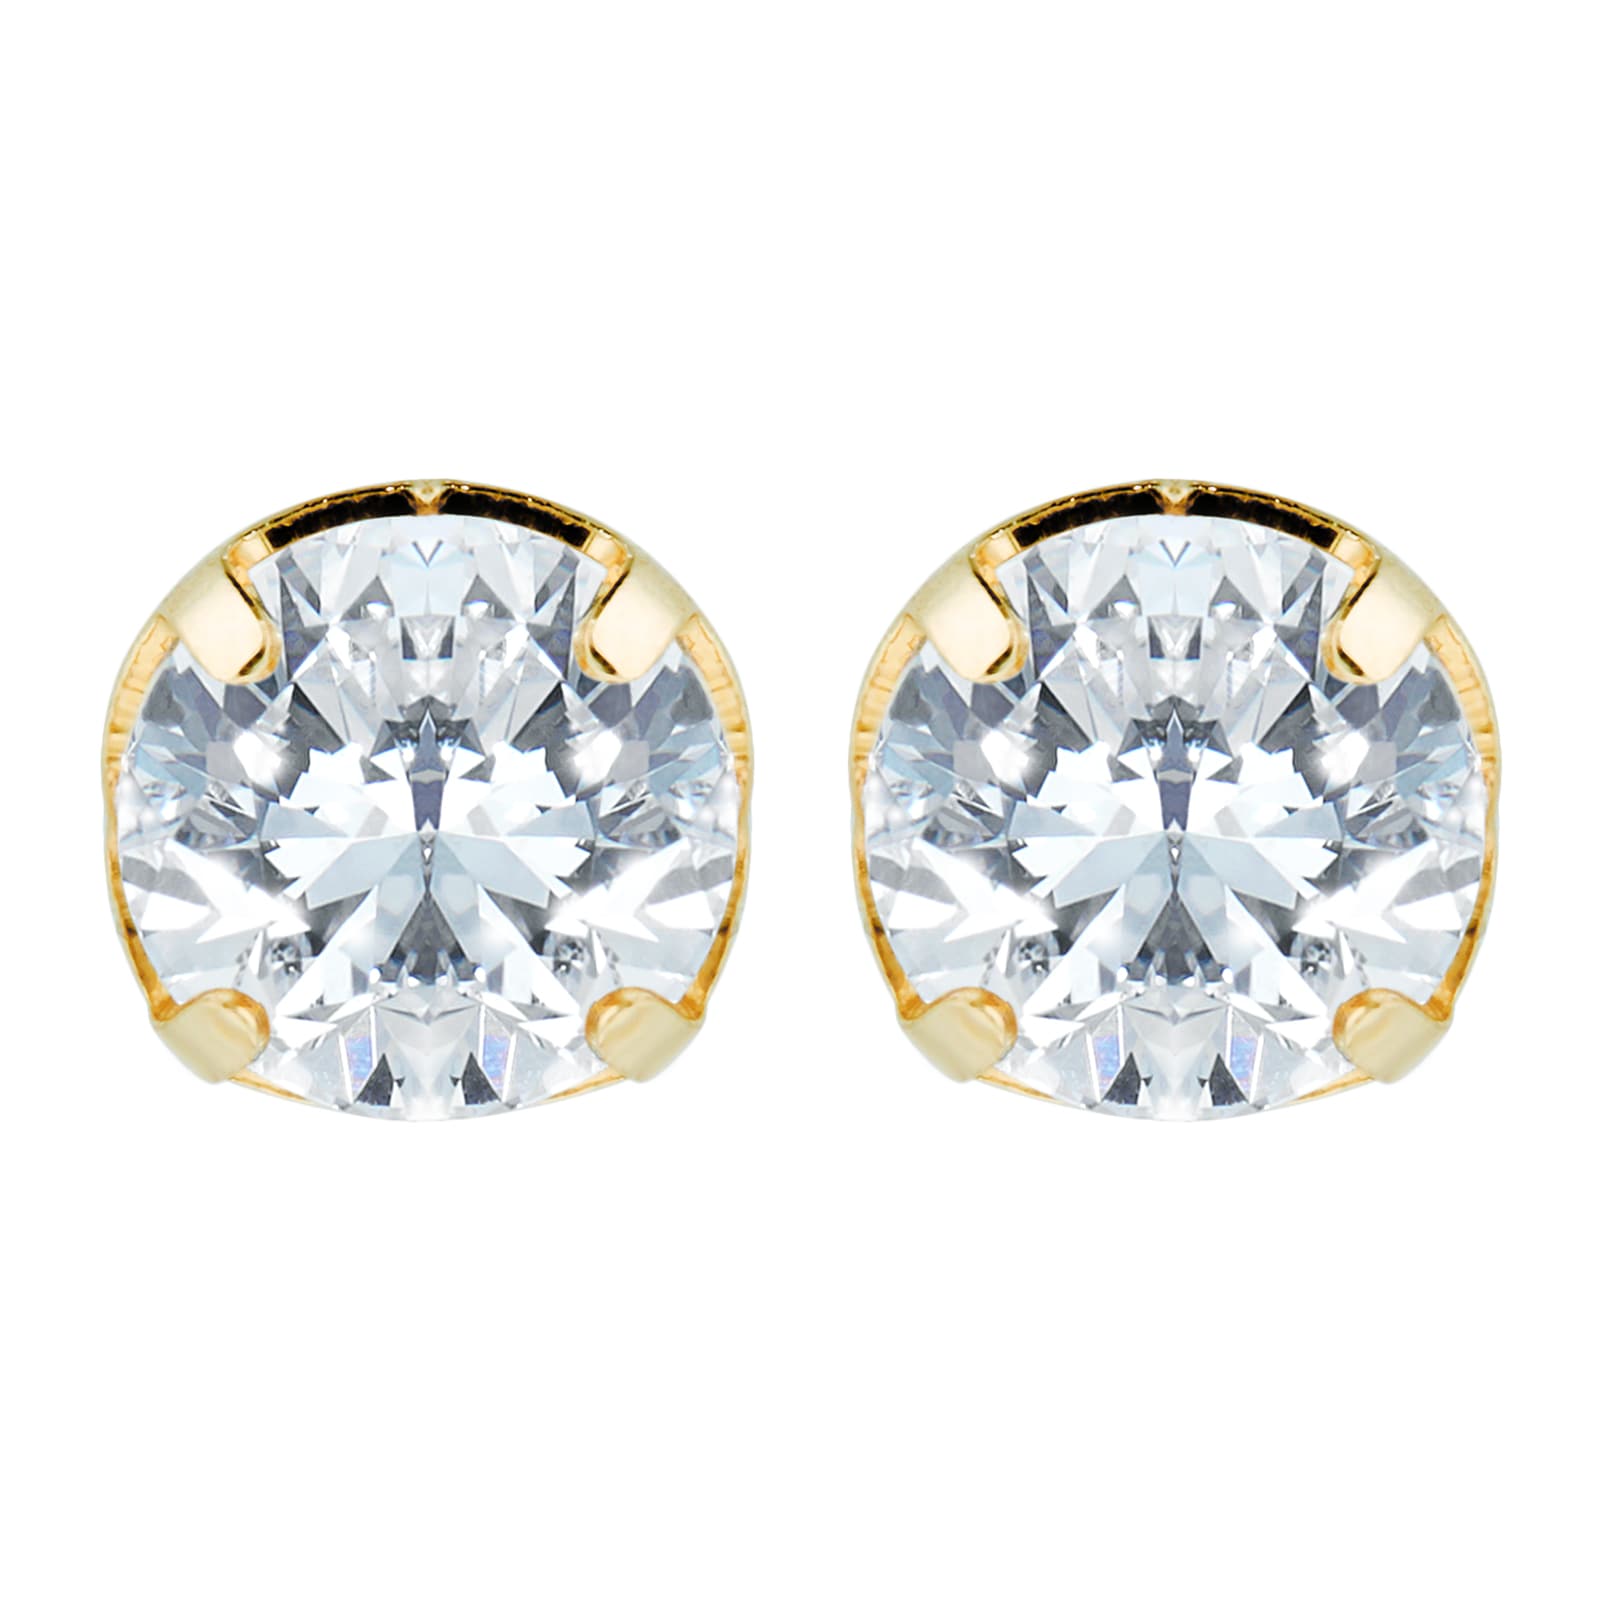 Buy Revere Sterling Silver Stud Earrings Set of 10 | Womens earrings | Argos